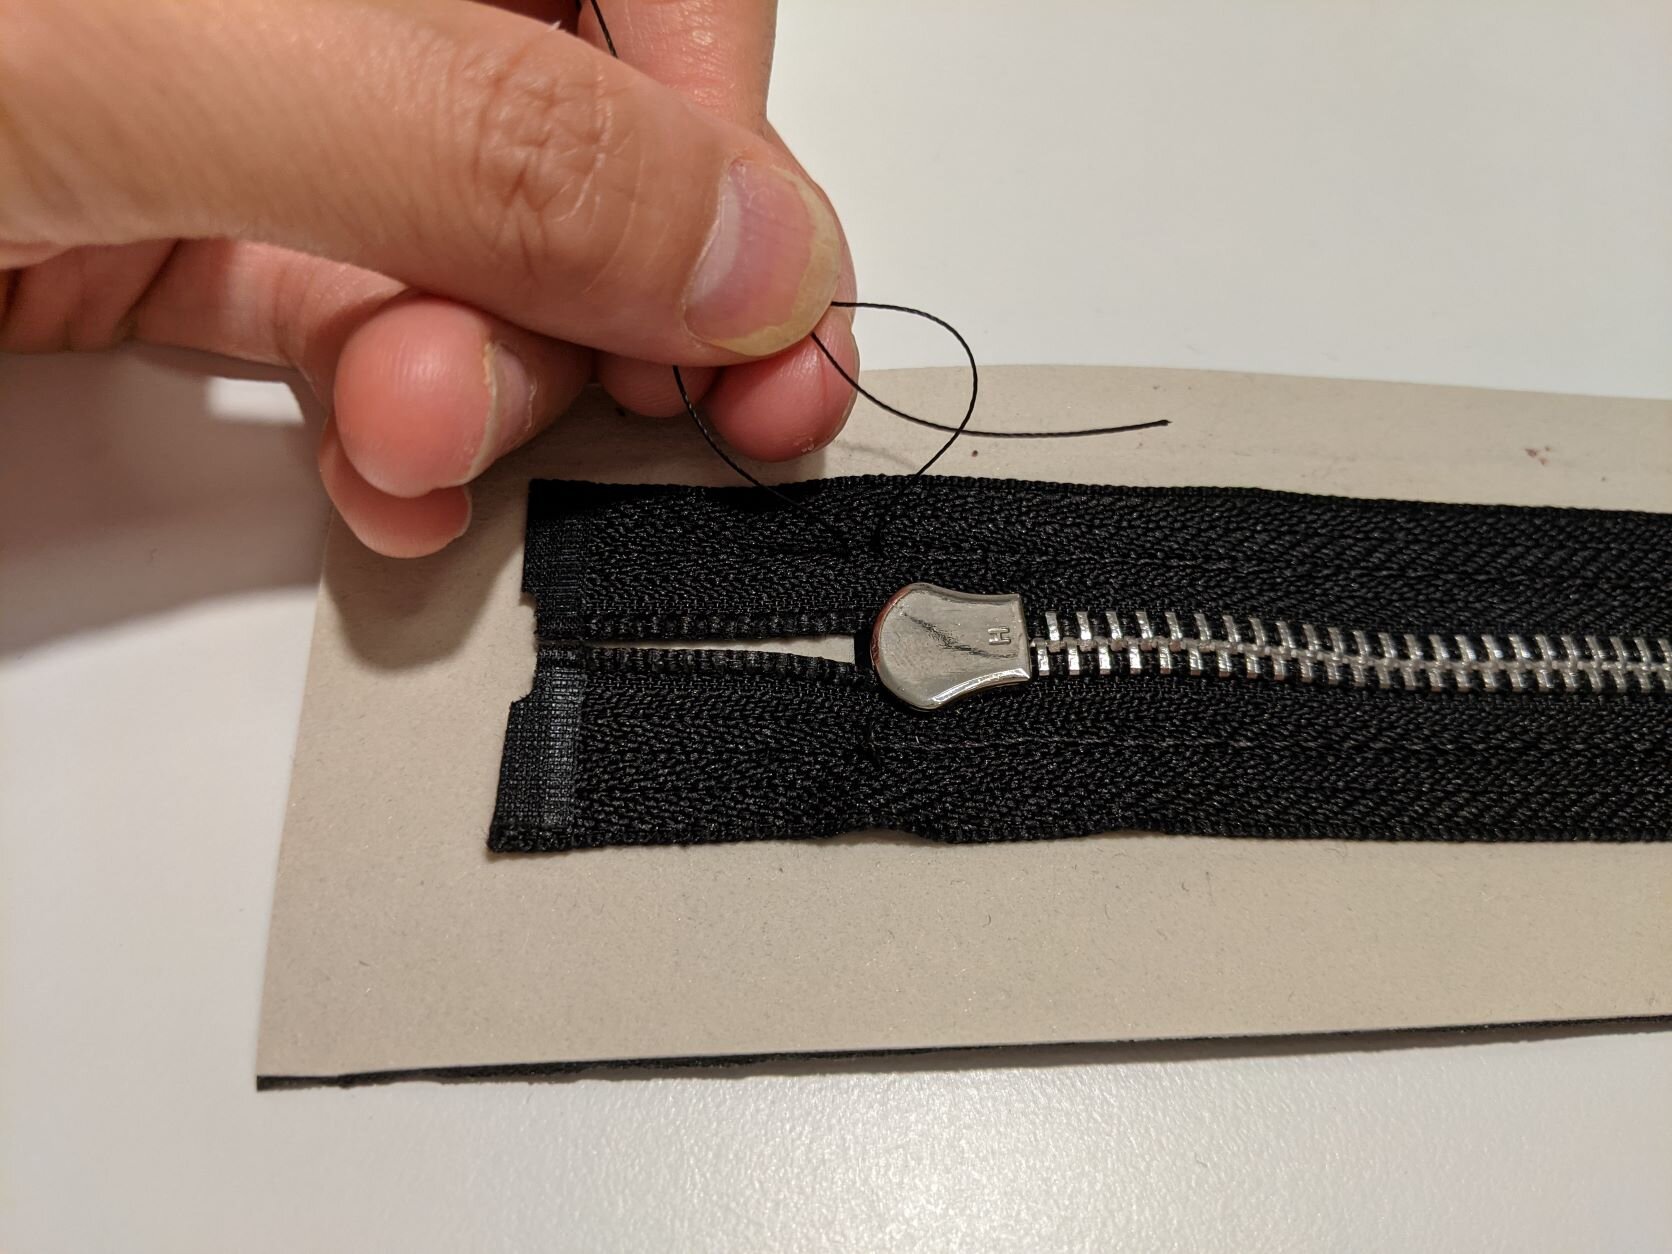 Securing stitching2 - resized.jpg